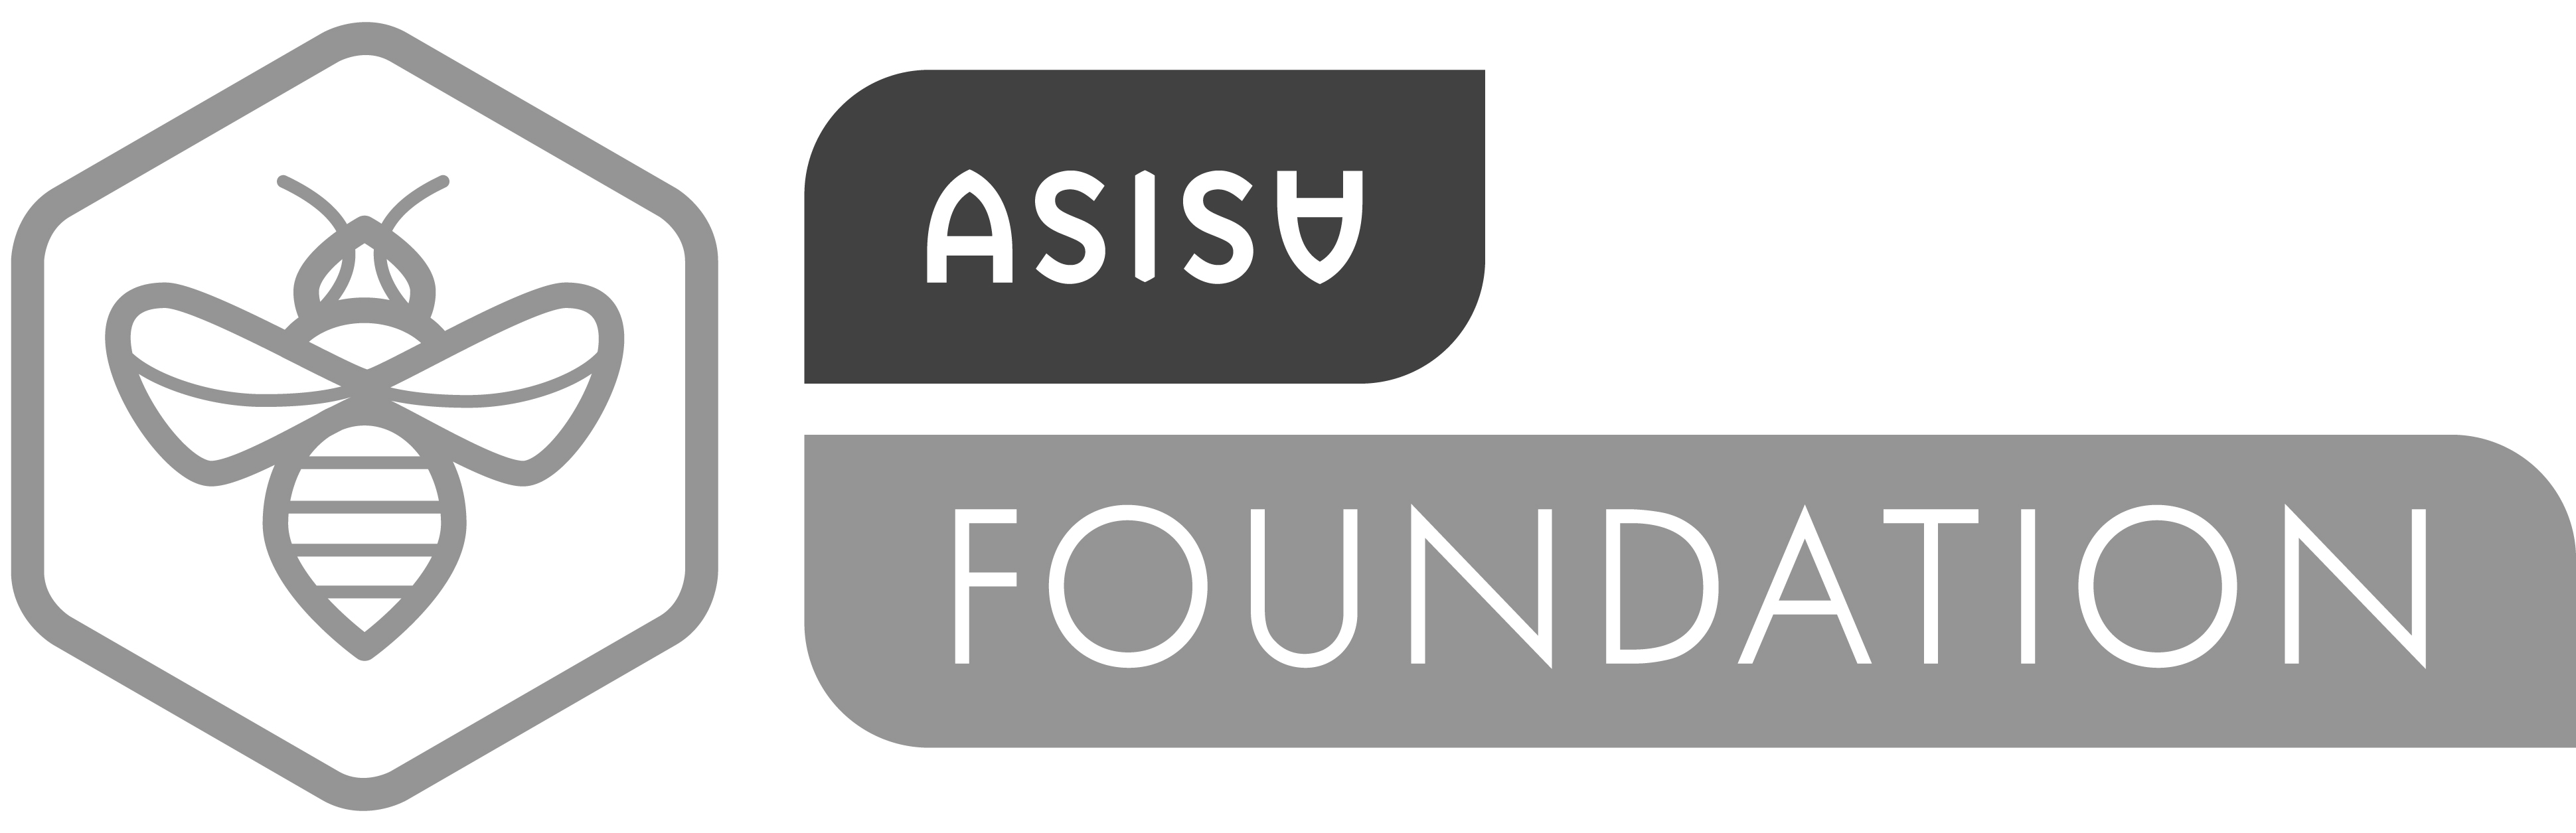 asisa-foundation-b-w